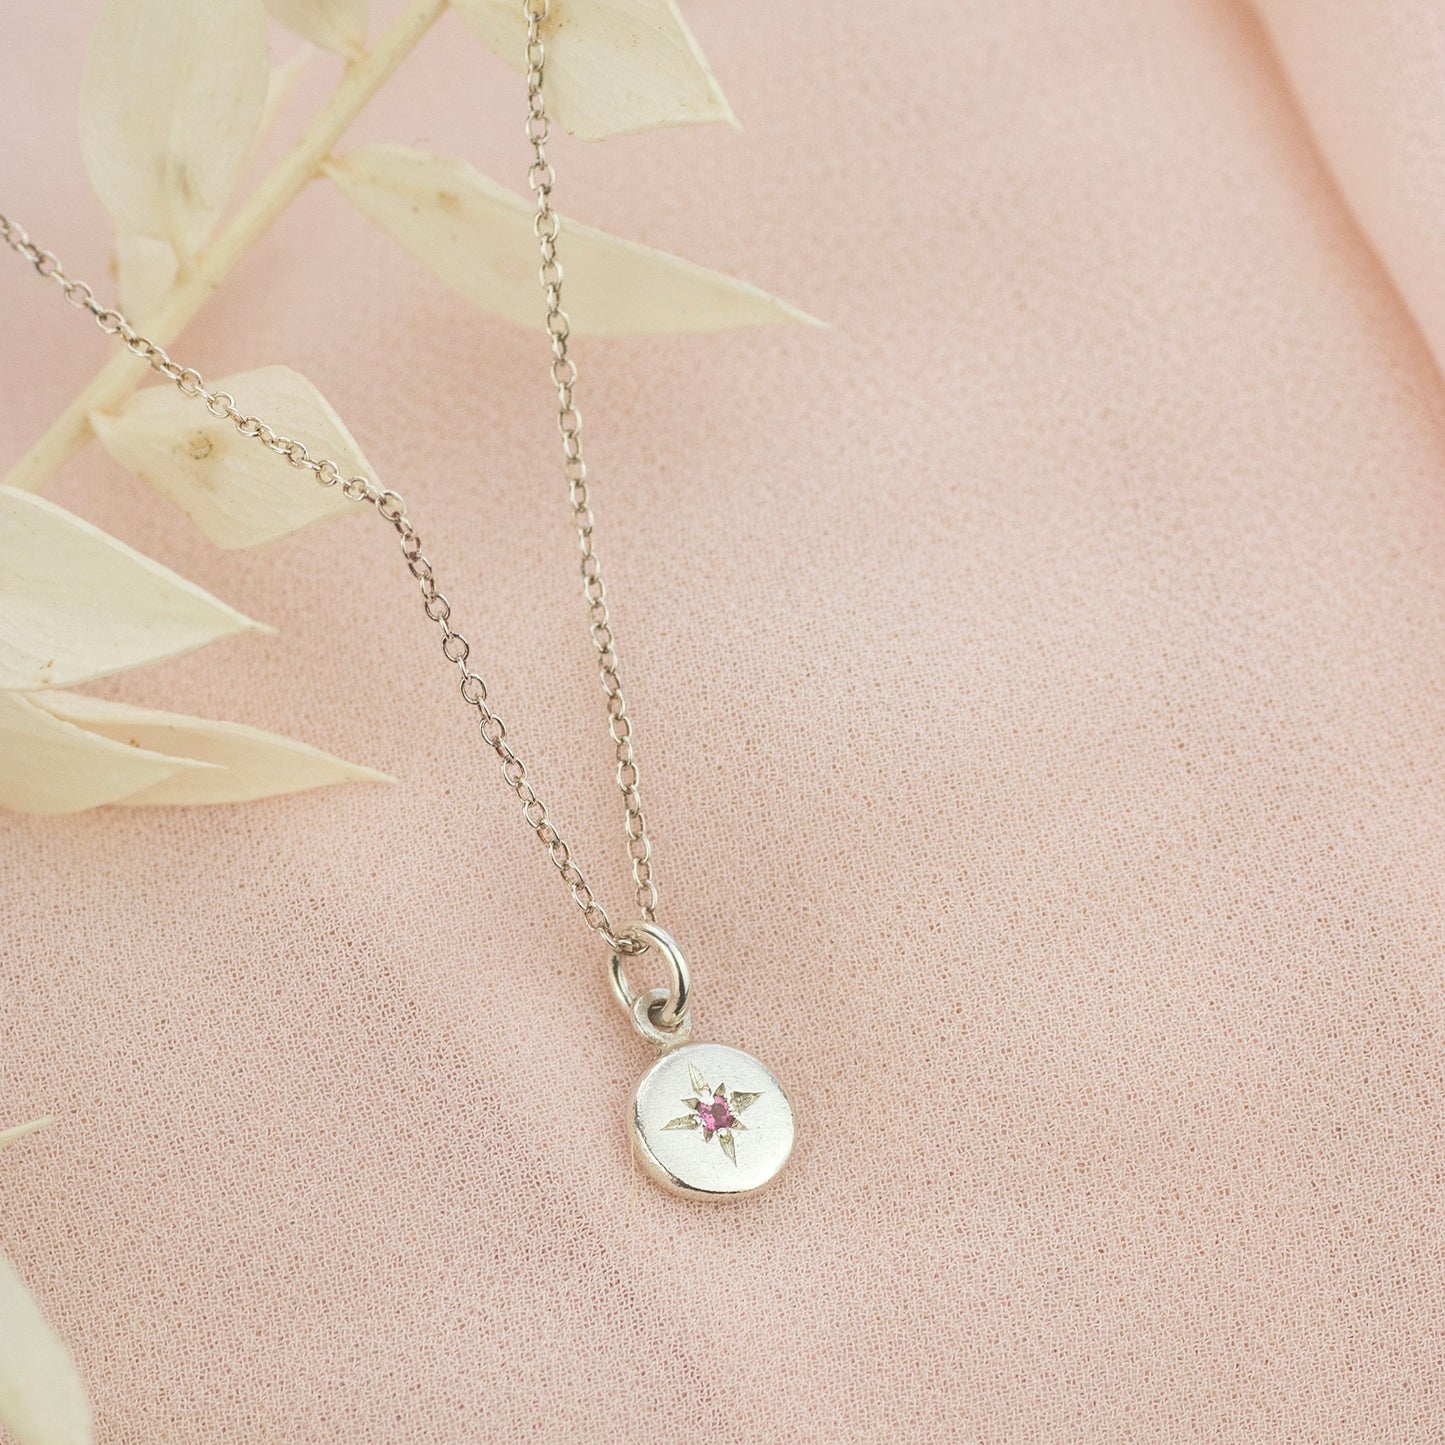 Gift for Niece - Tiny Birthstone Star Set Pendant